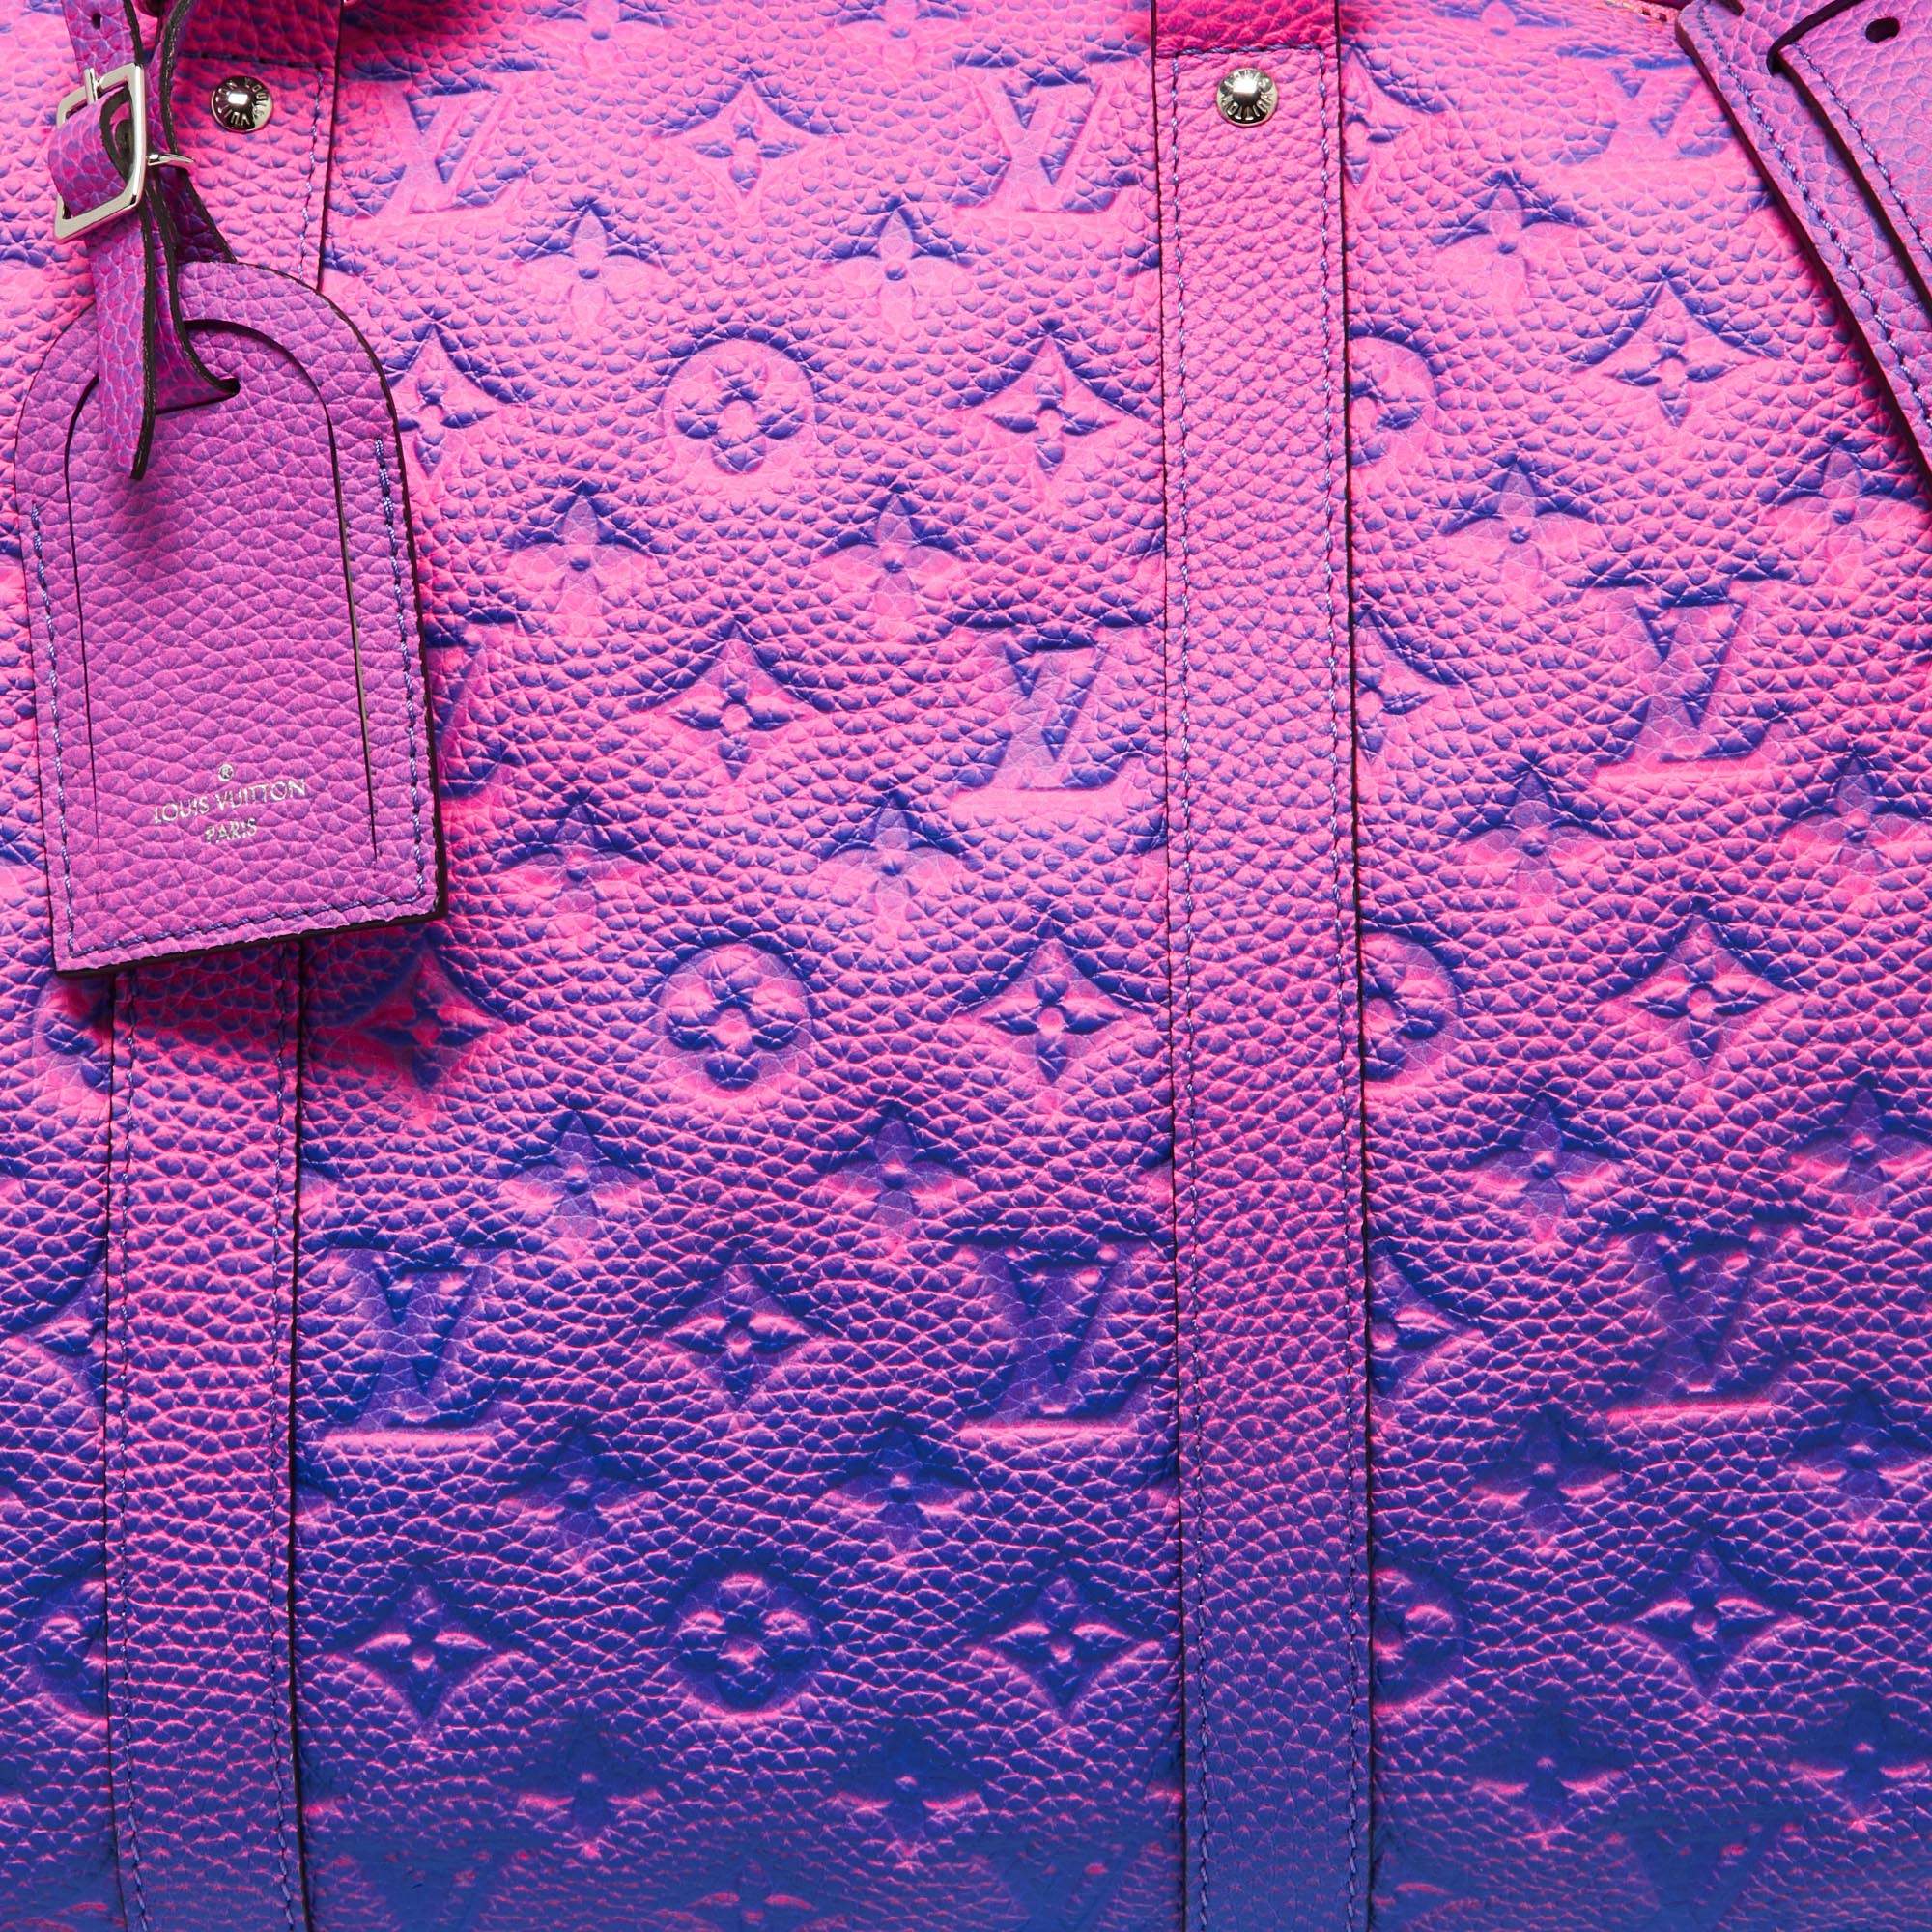 Louis Vuitton Illusion Keepall 50 pink purple gradient duffle bag